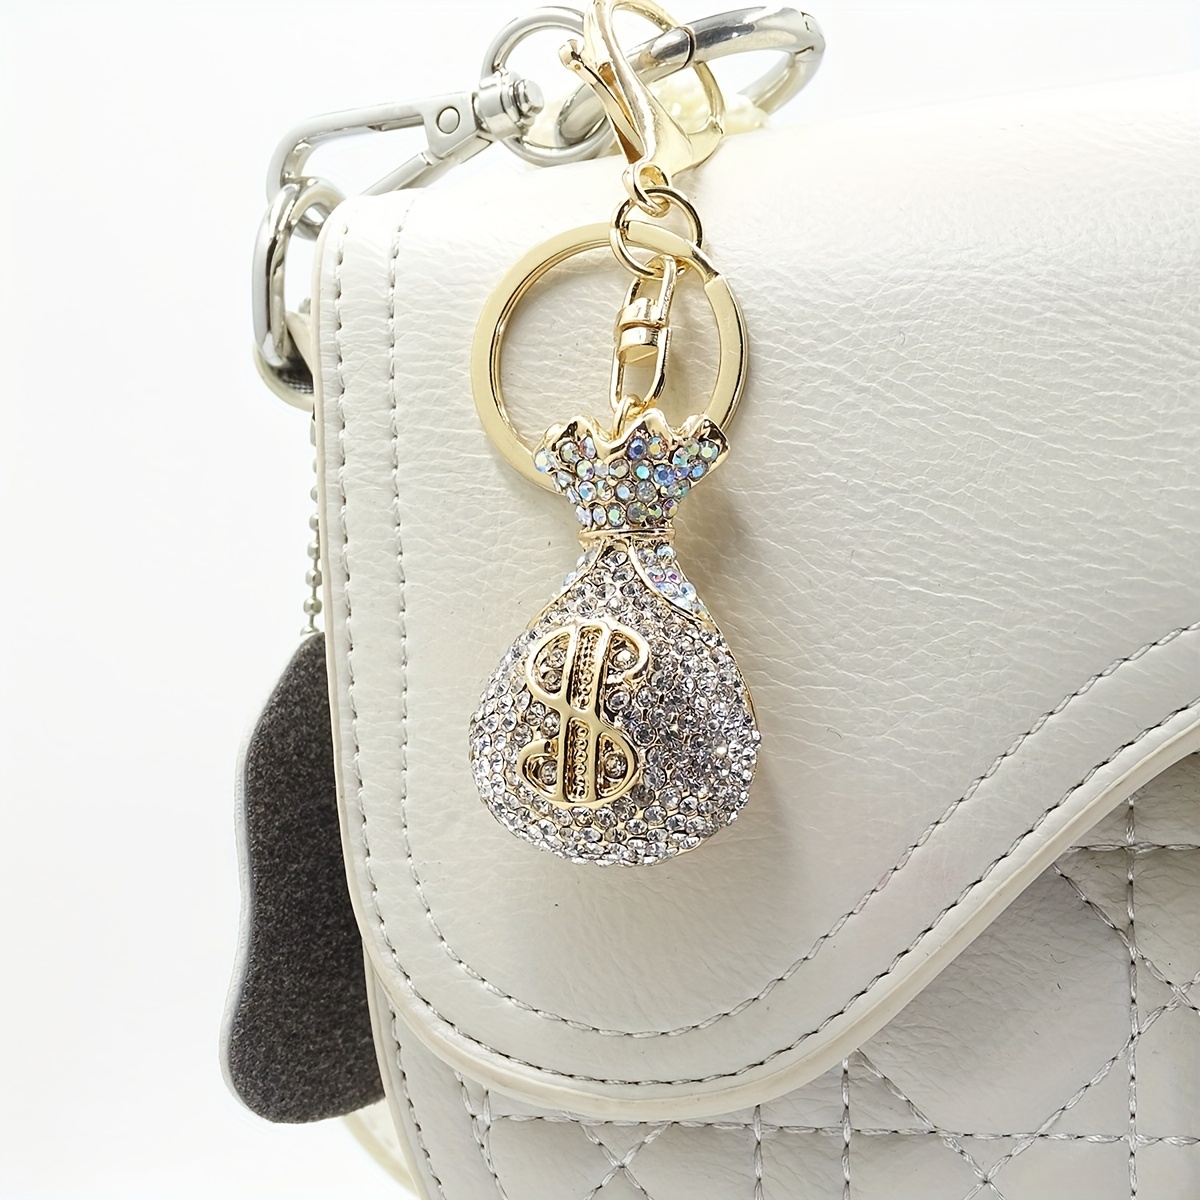 Louis Vuitton bag charm keychain gift Christmas